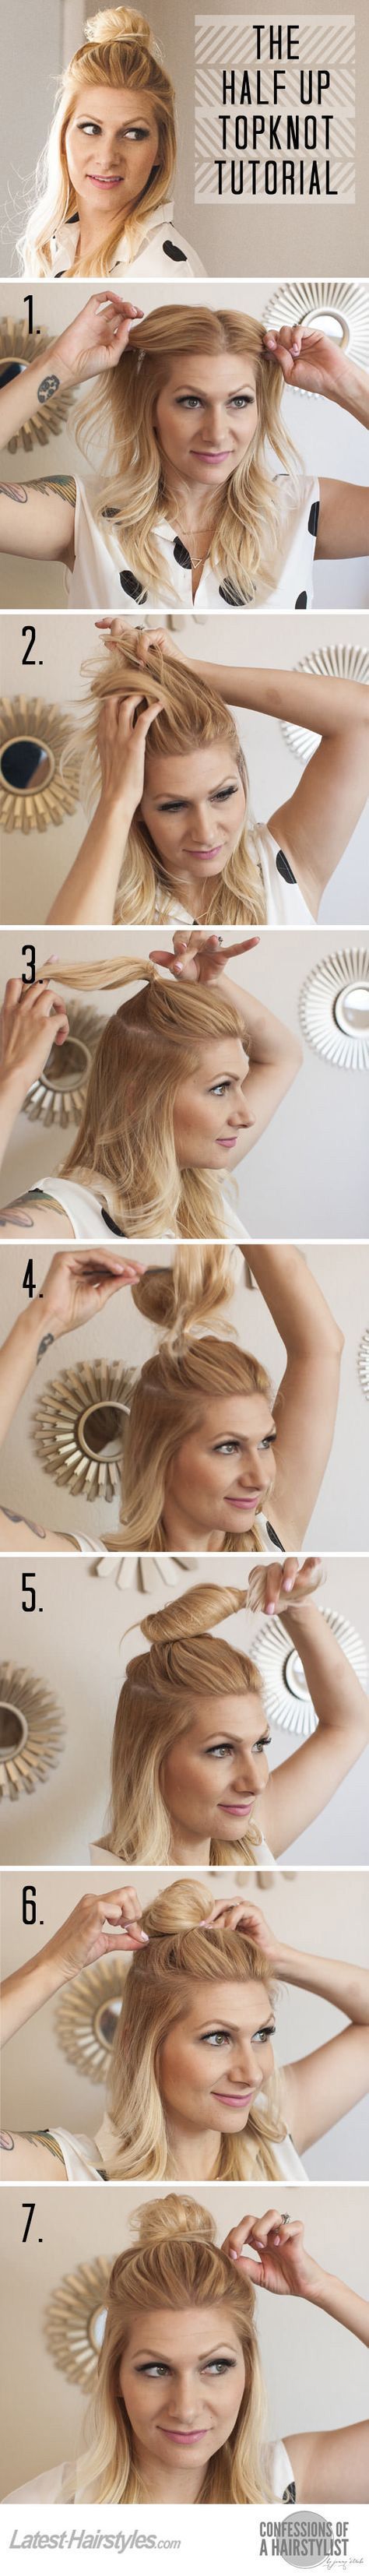 Easy Step by step hair tutorials for long hair